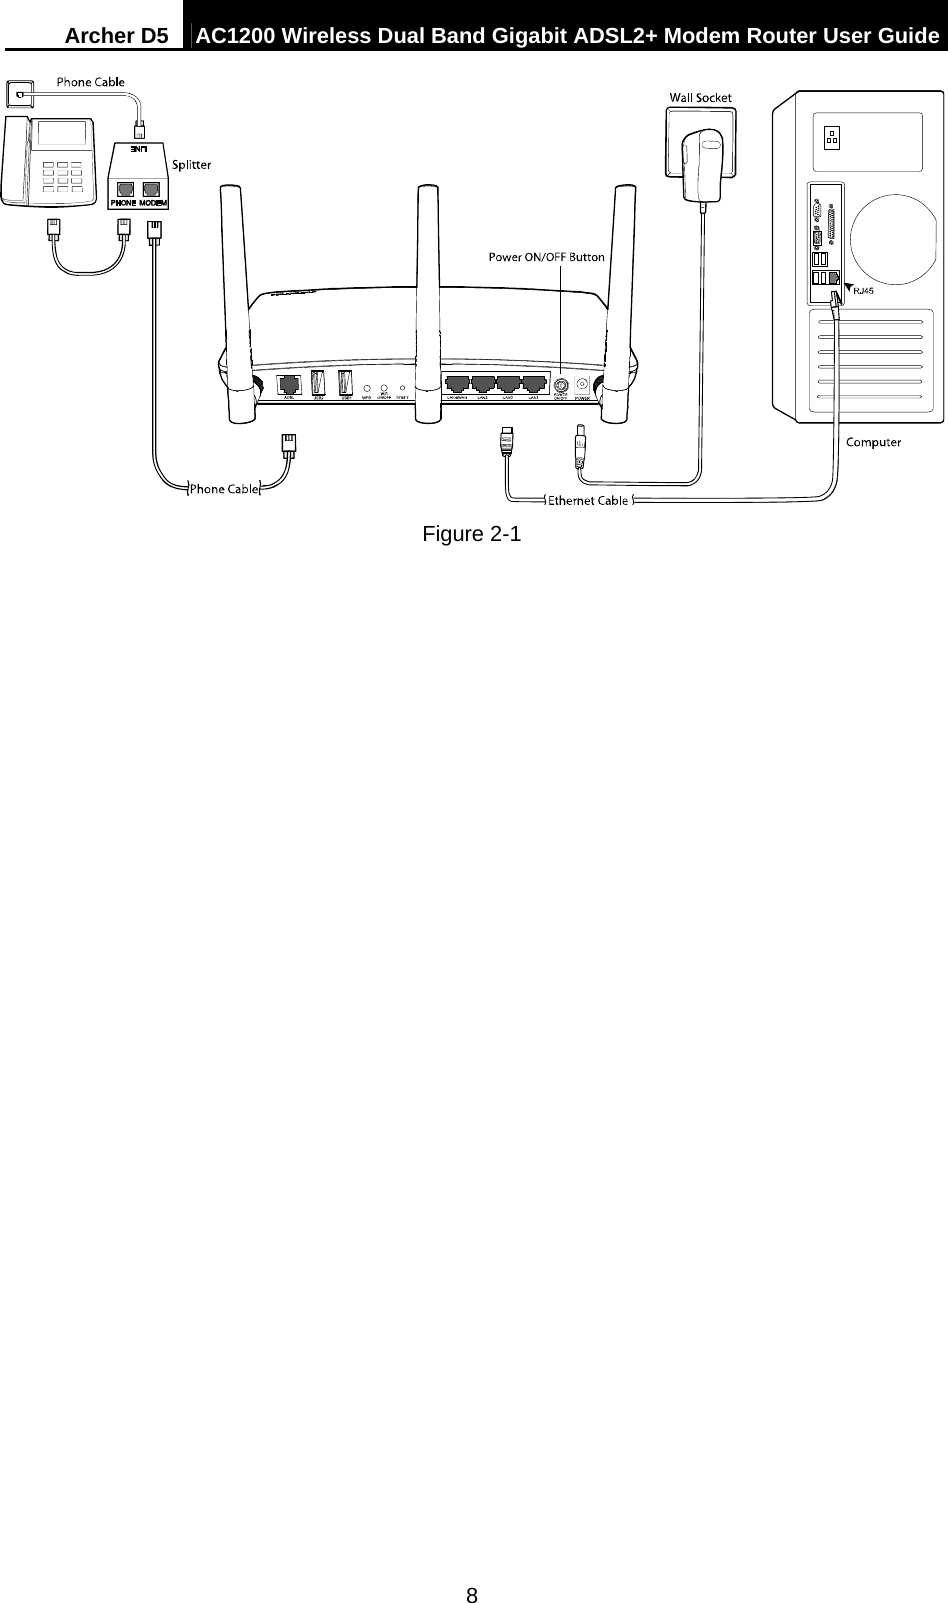 Archer D5  AC1200 Wireless Dual Band Gigabit ADSL2+ Modem Router User Guide 8  Figure 2-1 